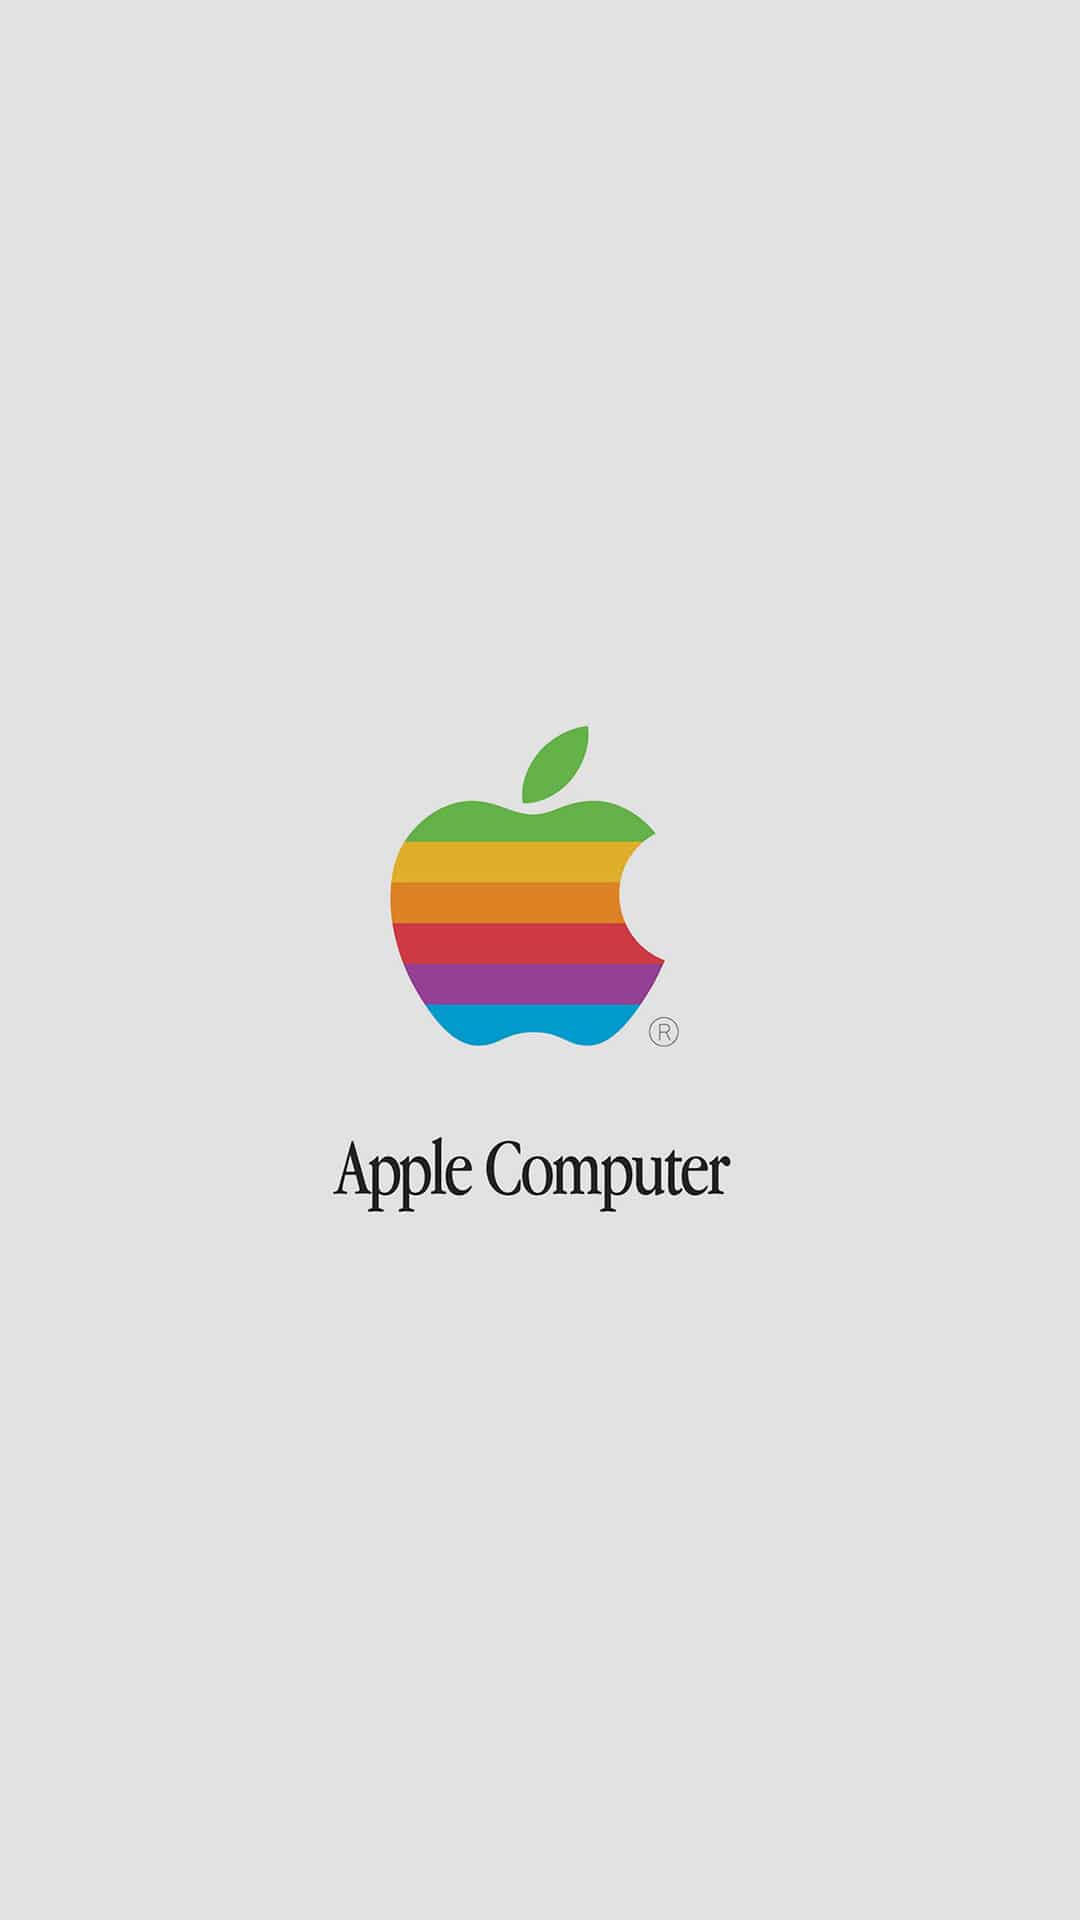 Retro Mac Wallpaper  Apple logo wallpaper iphone Apple logo wallpaper  Computer wallpaper